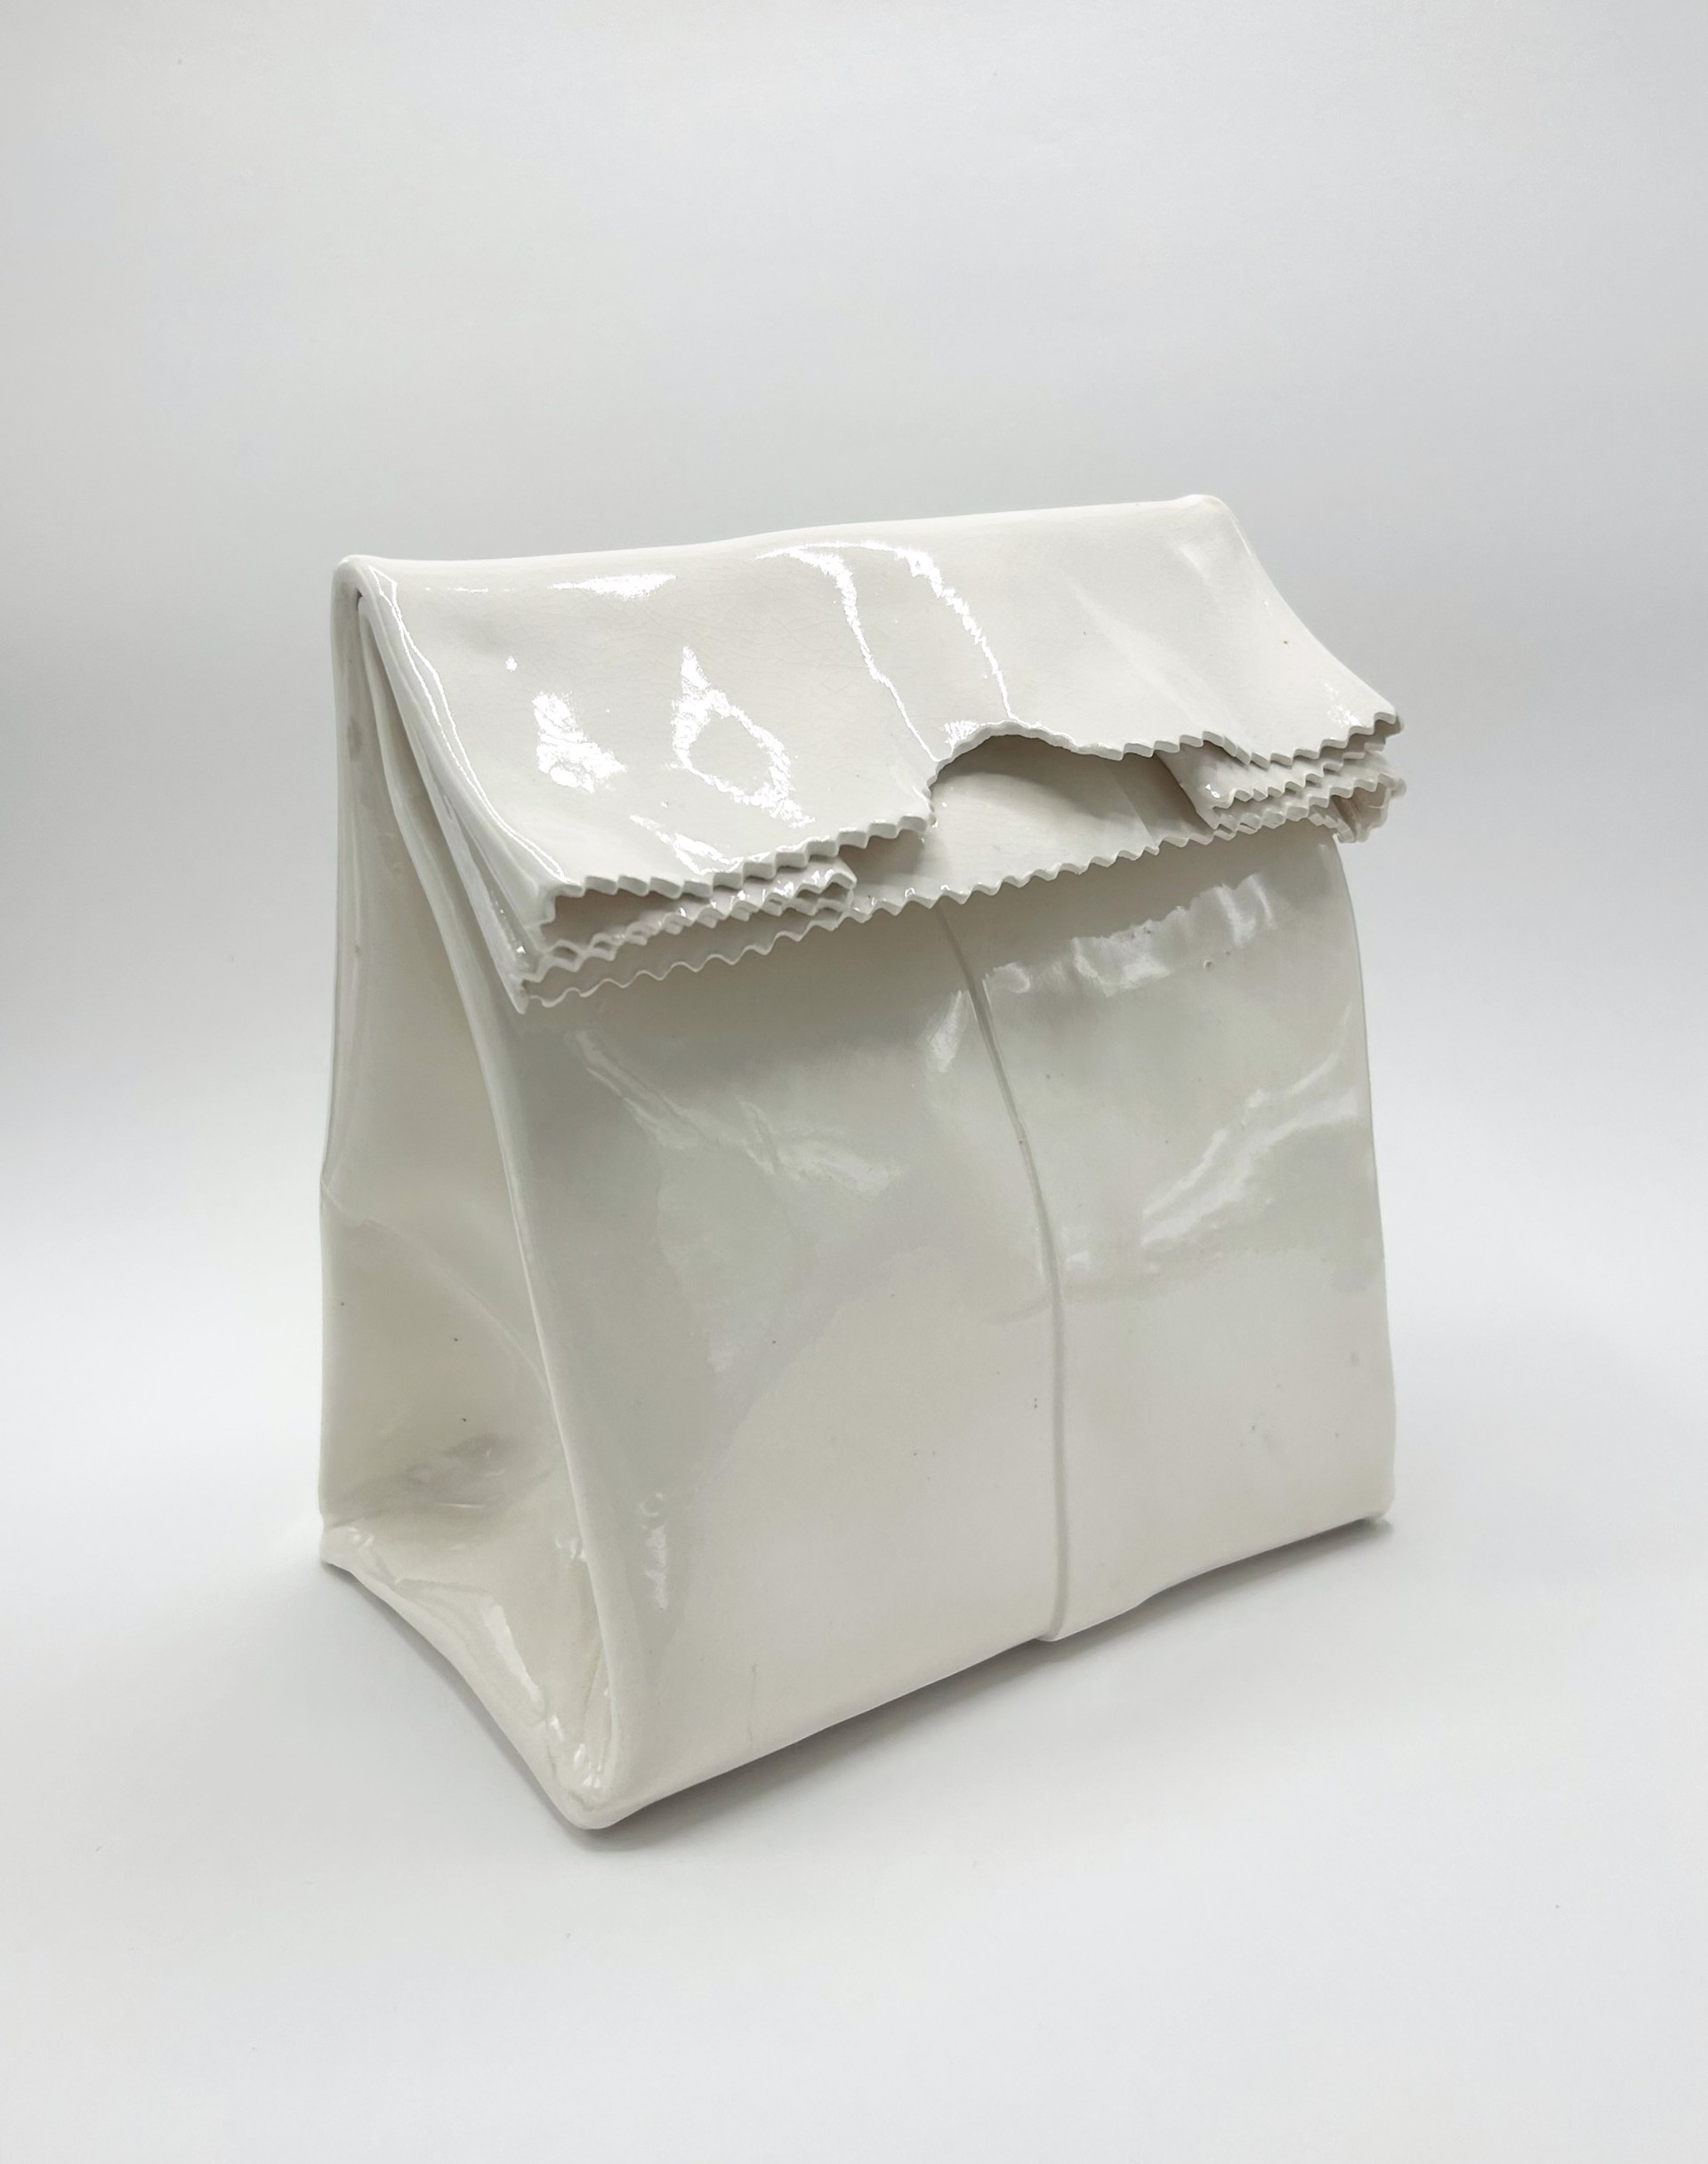 Big, White Bag by Chandra Beadleston